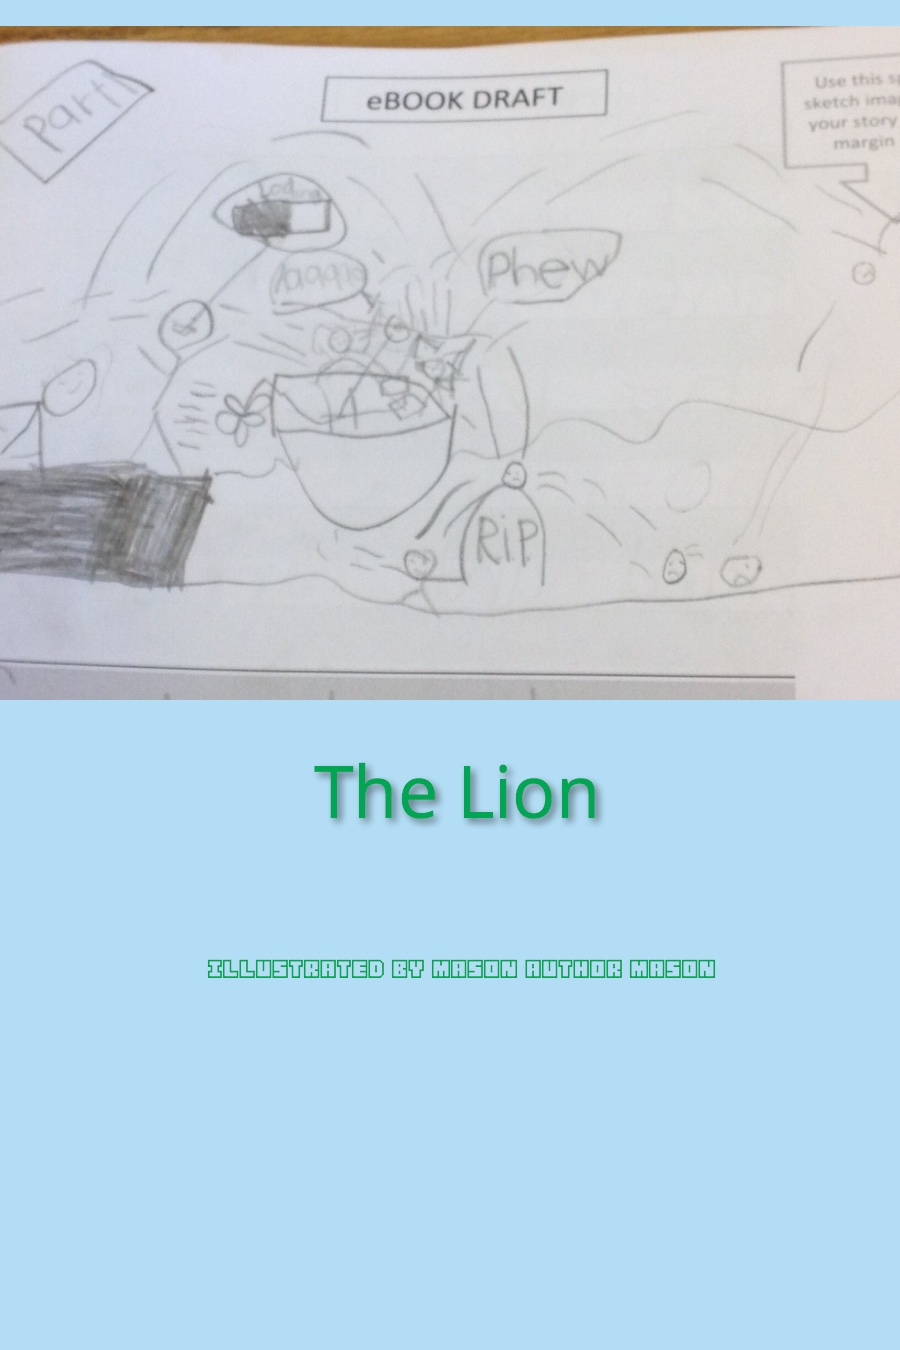 The Lion by Mason W